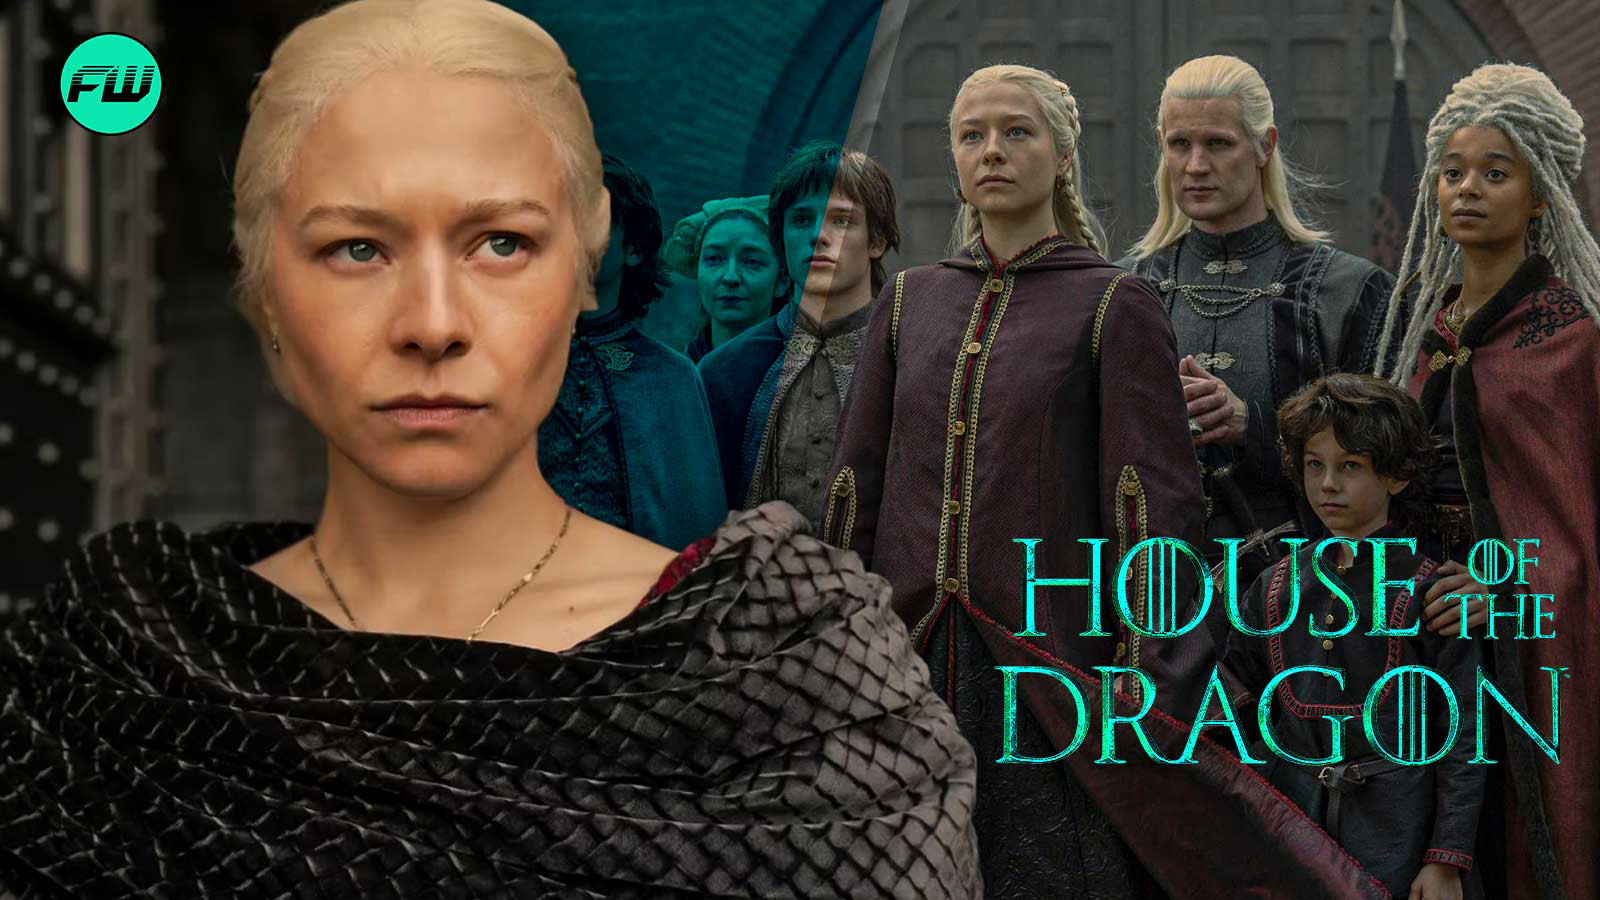 emma d’arcy, house of the dragon season 2